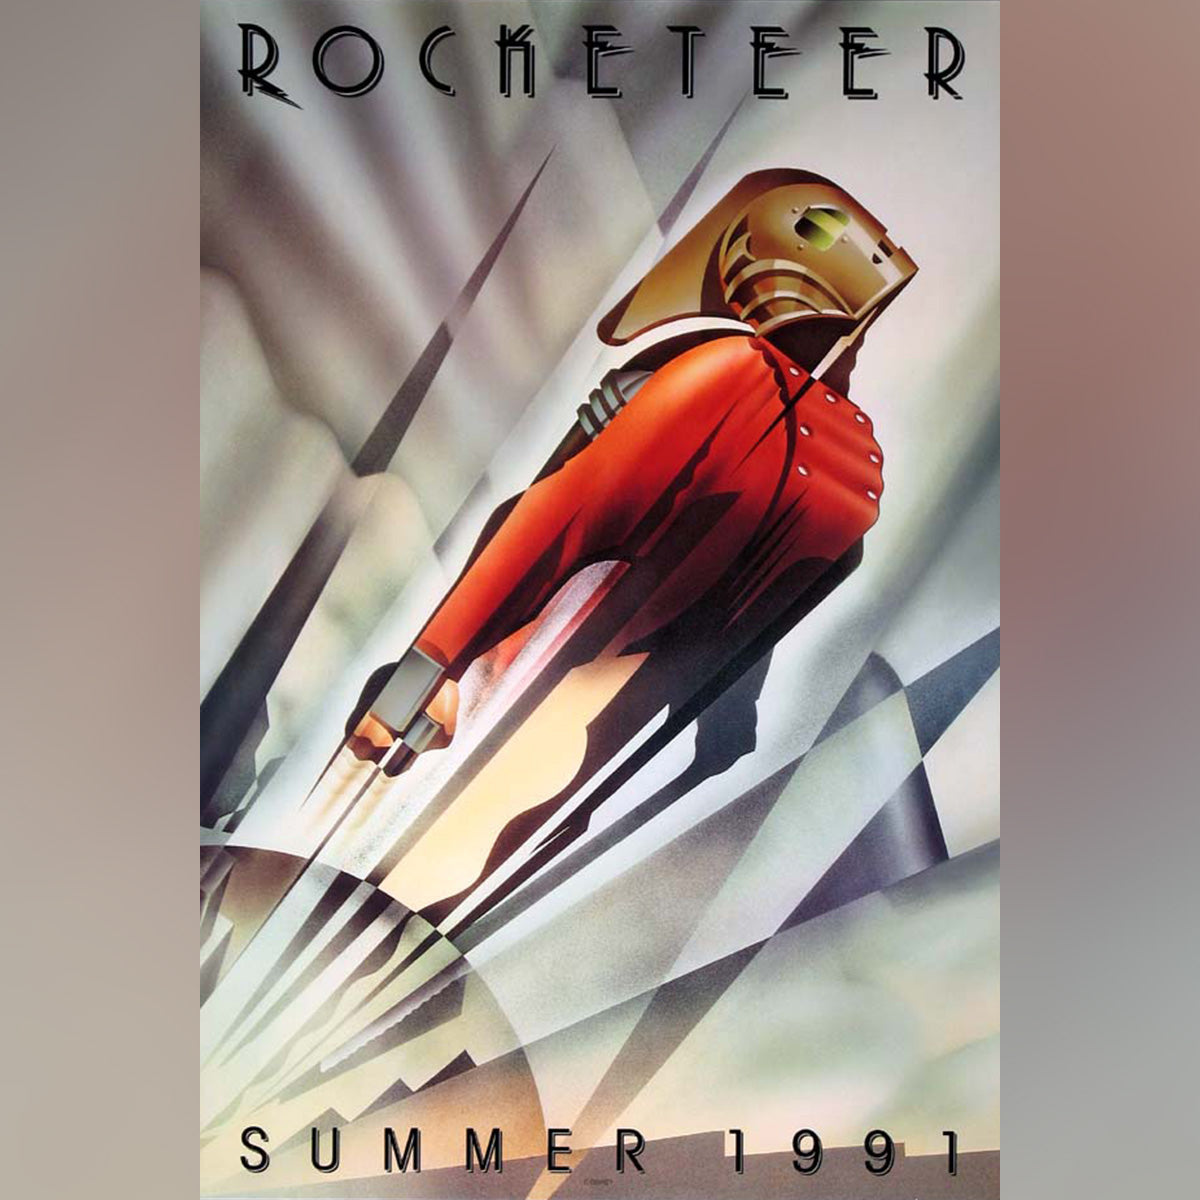 Original Movie Poster of Rocketeer, The (1991)